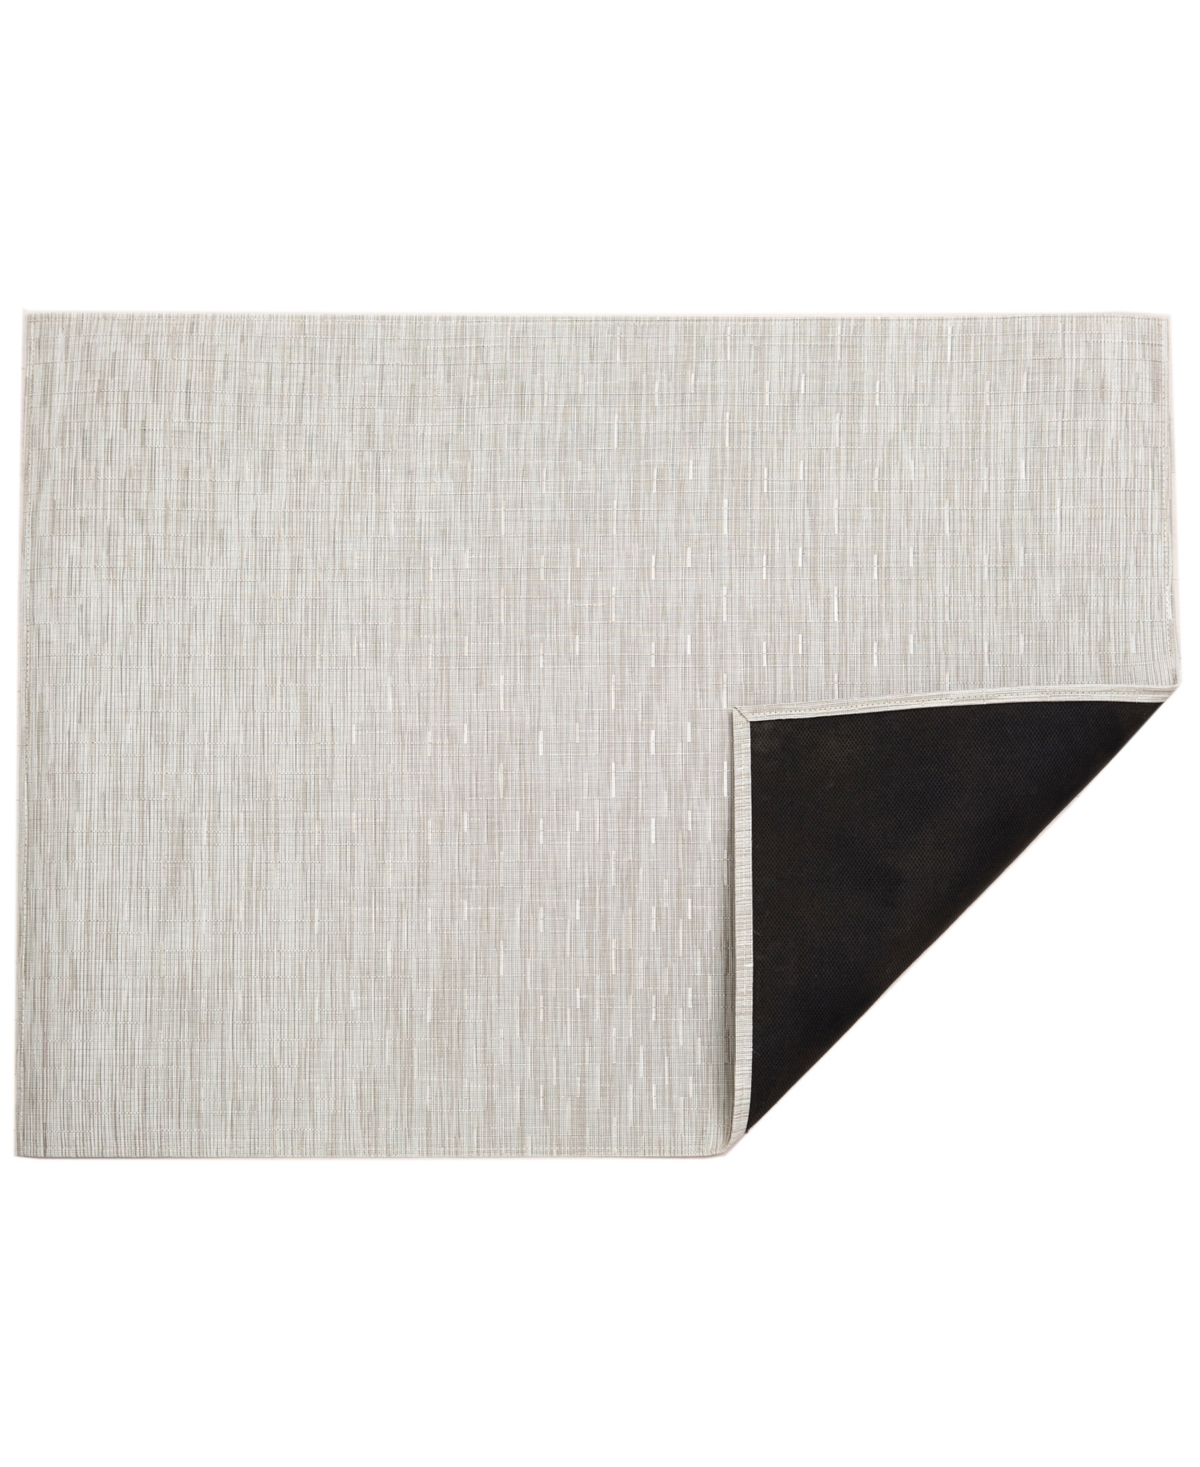 Bamboo Floormat, 35" x 48" - Coconut